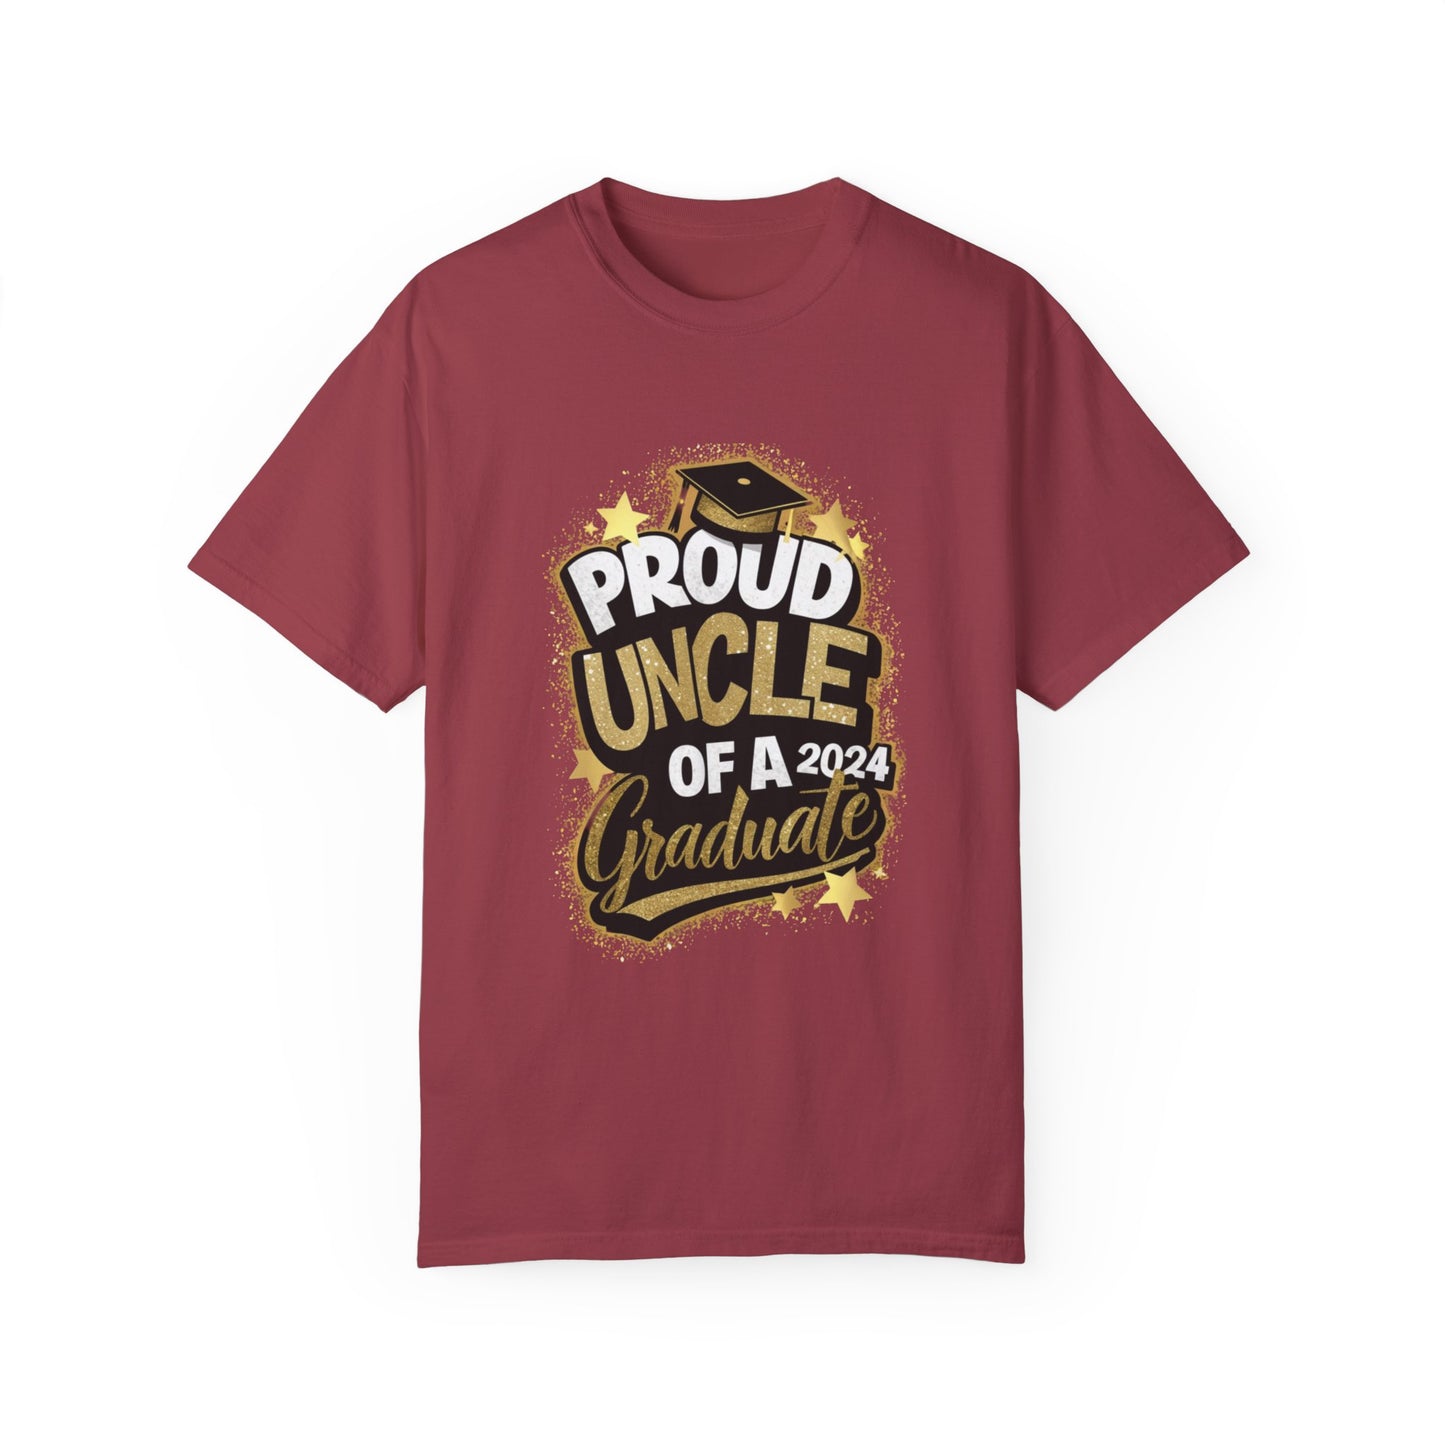 Proud Uncle of a 2024 Graduate Unisex Garment-dyed T-shirt Cotton Funny Humorous Graphic Soft Premium Unisex Men Women Chili T-shirt Birthday Gift-7